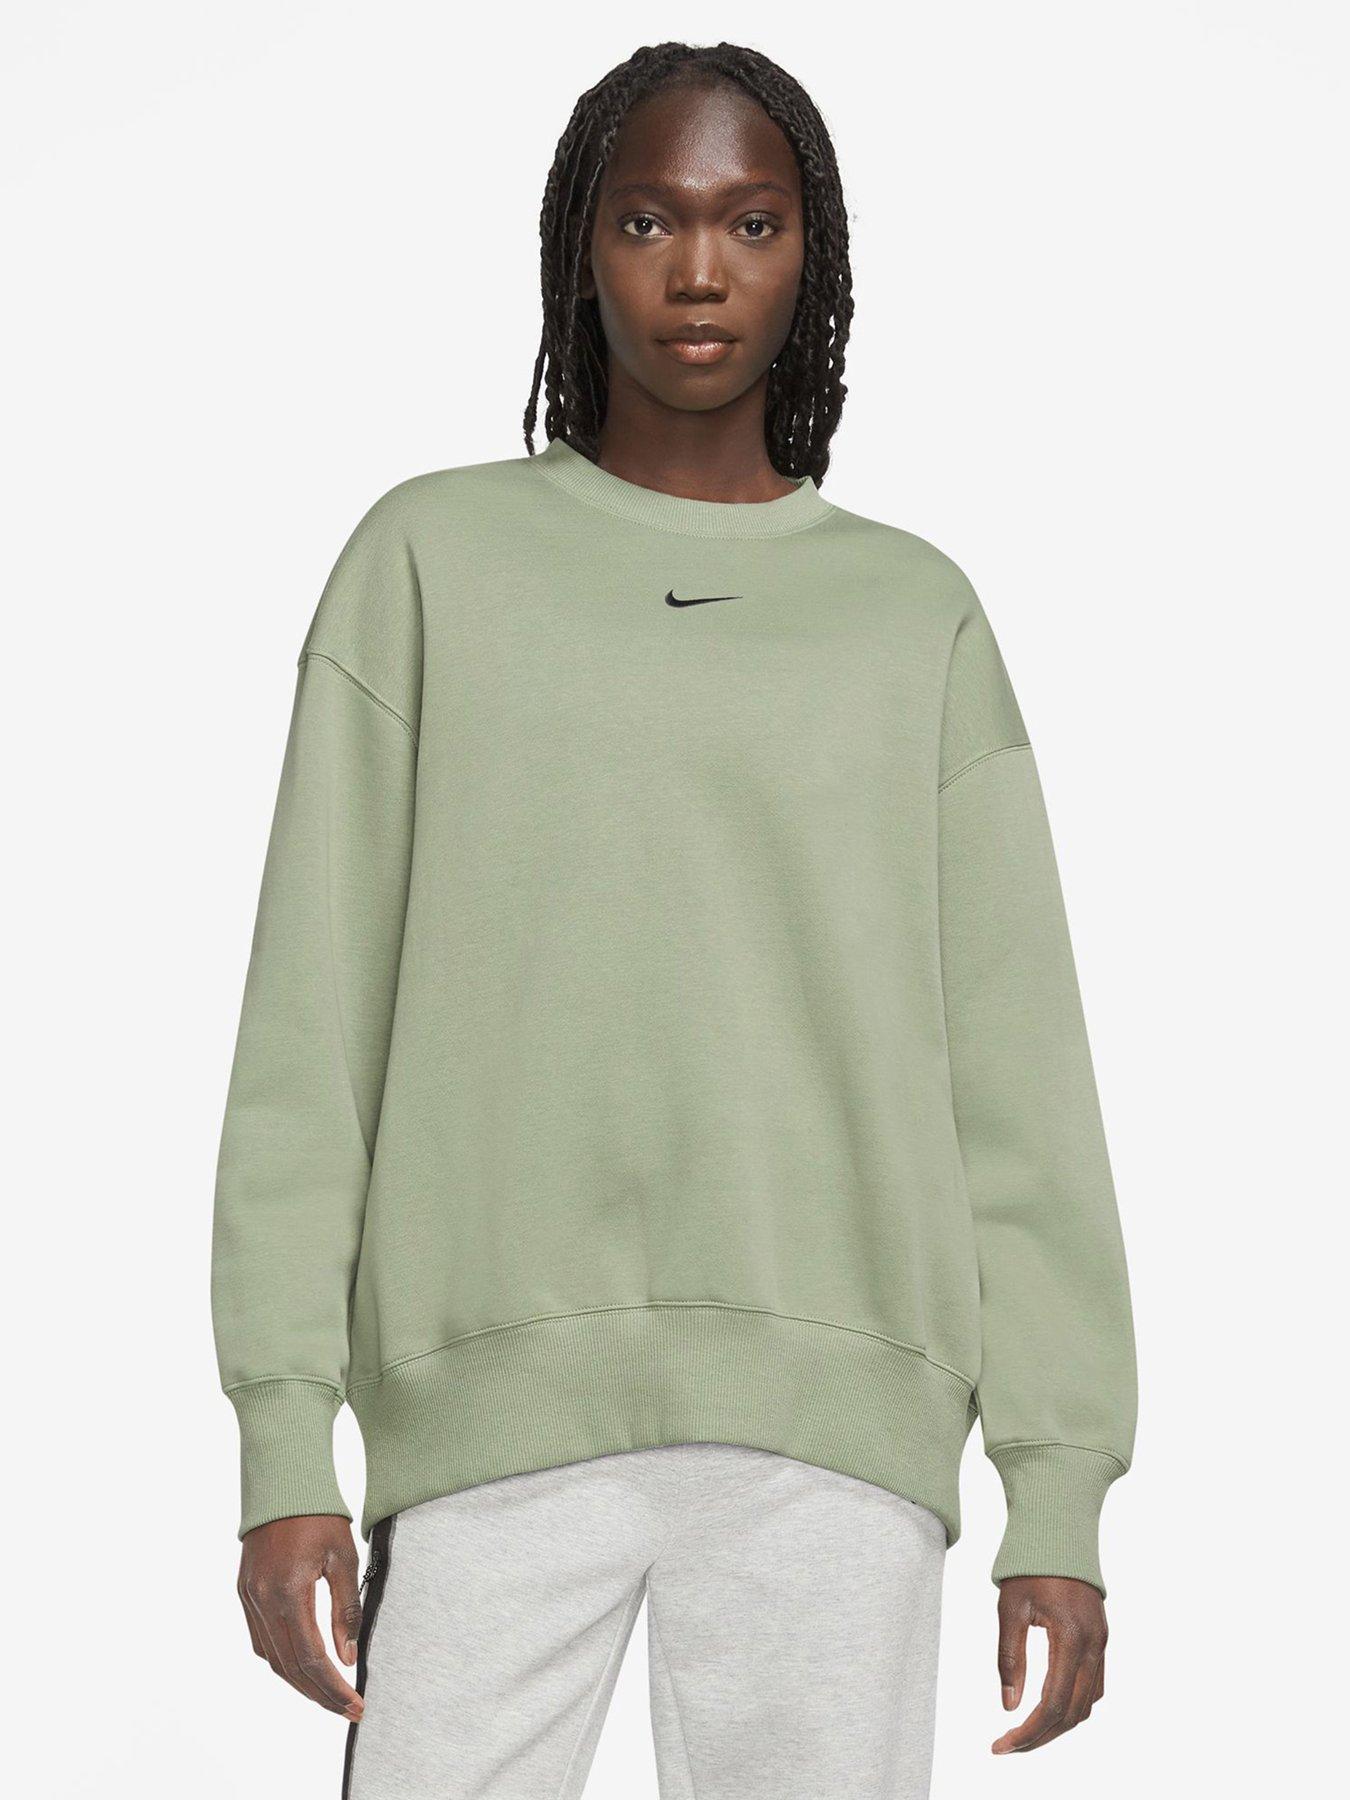 DISNEY Womens Oversized Graphic Sweatshirt Jumper UK 18 XL Grey